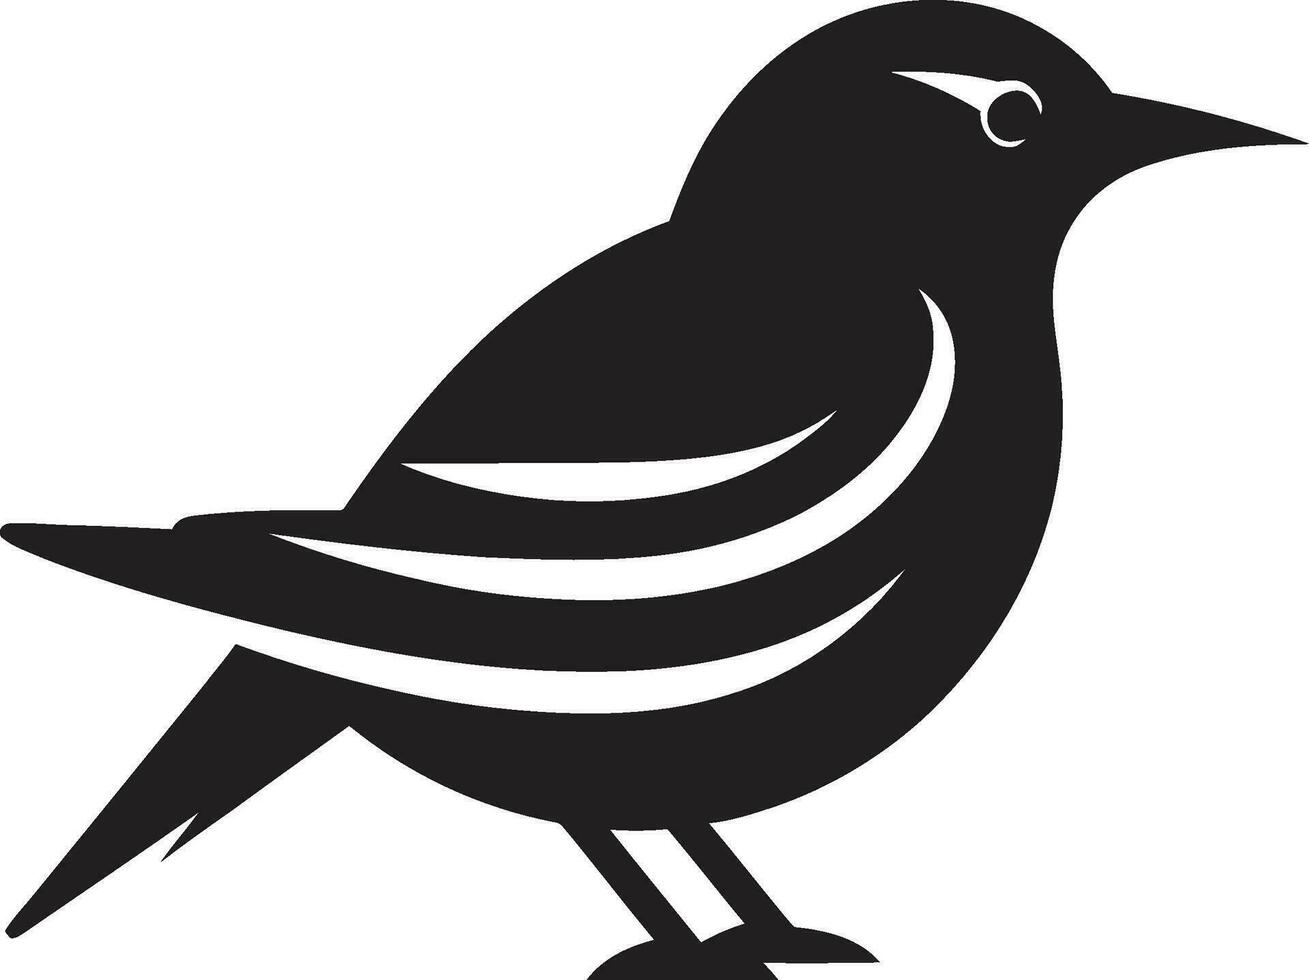 Crows Majesty Crest Majestic Eagle Design vector